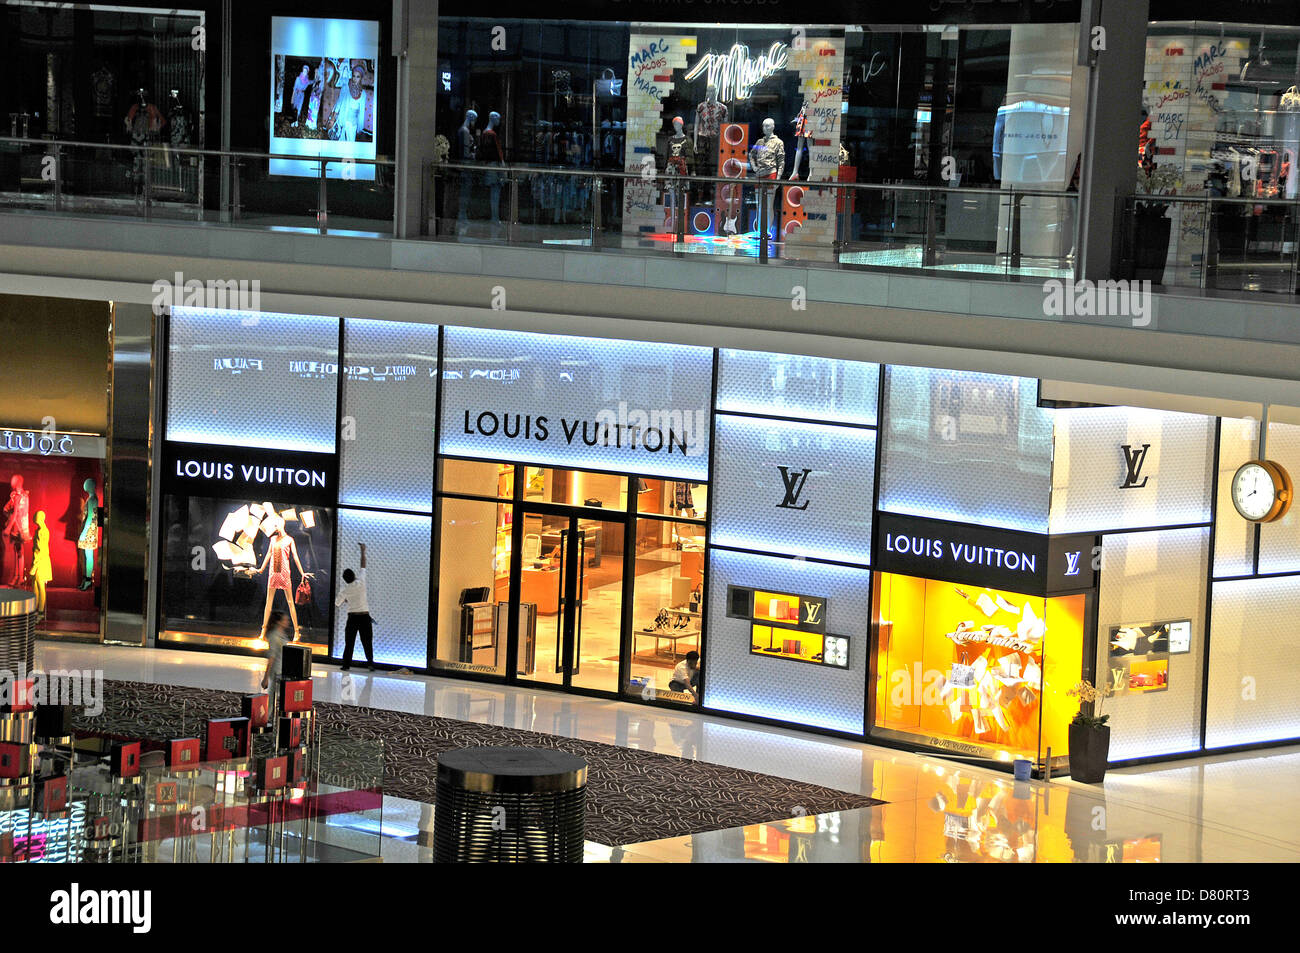 Louis Vuitton boutique The Dubai mall Dubai UAE Stock Photo, Royalty Free Image: 56567059 - Alamy